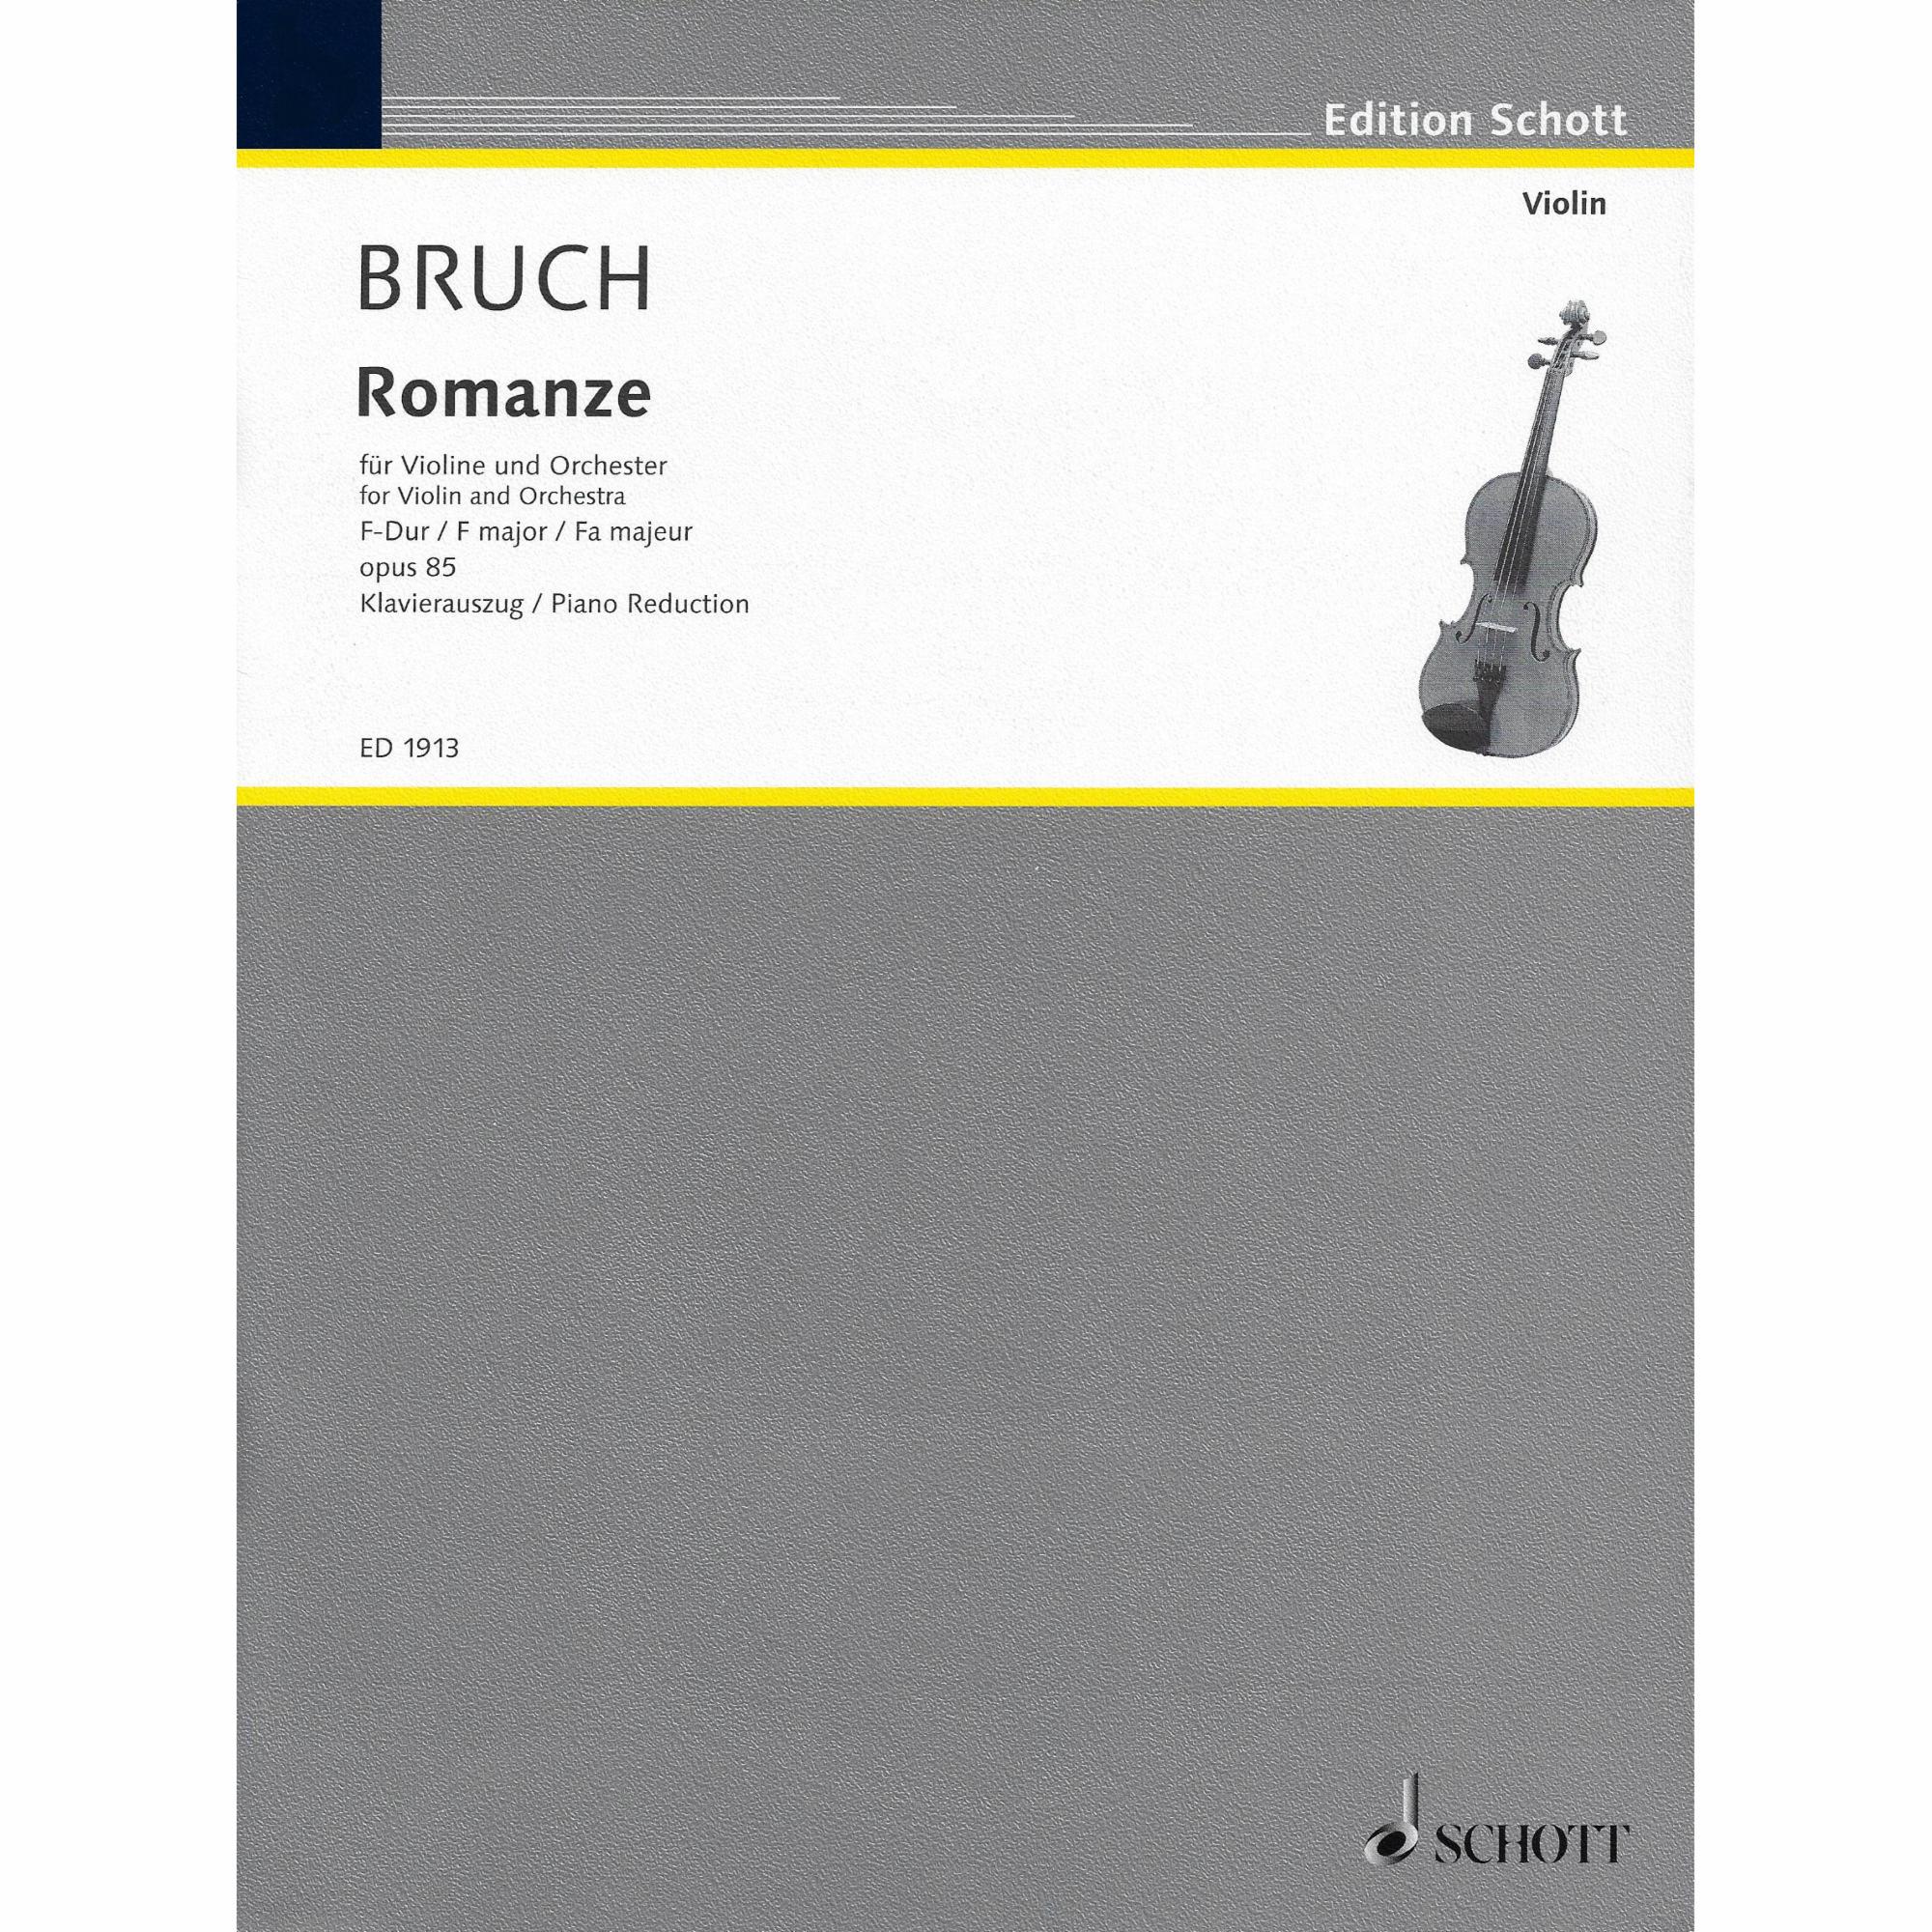 Bruch -- Romanze in F Major, Op. 85 for Violin and Piano